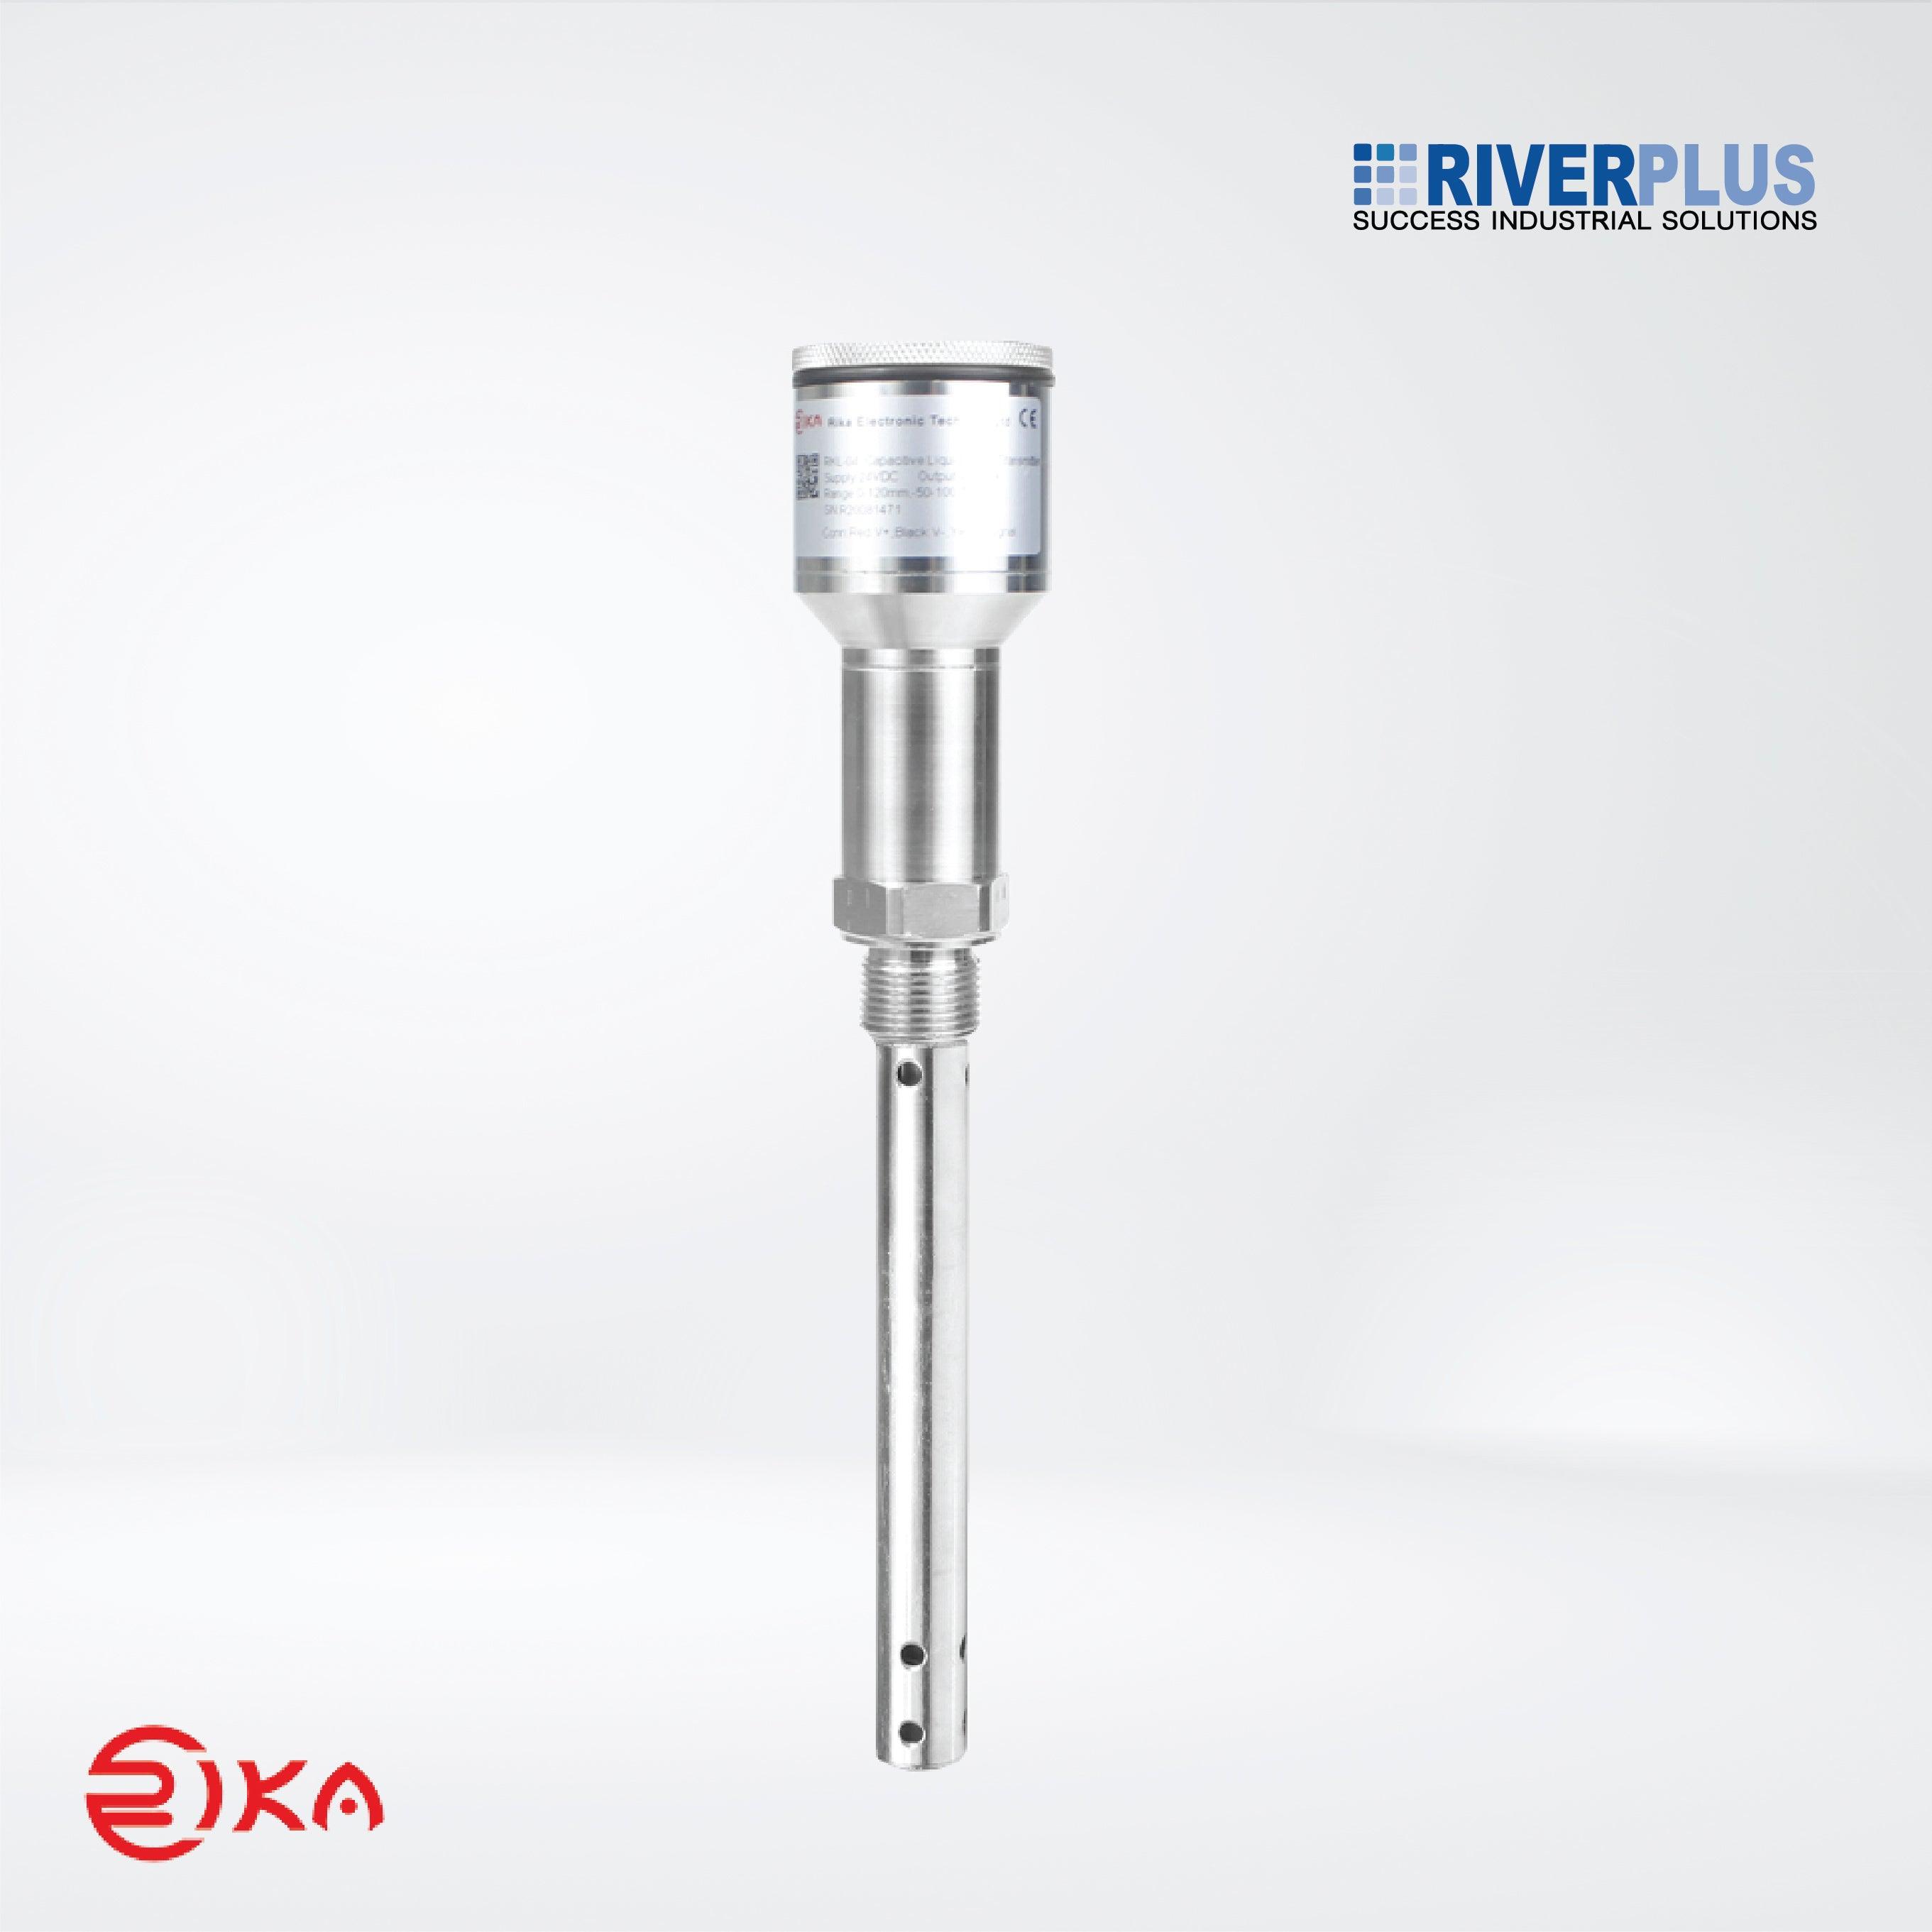 RKL-04 Capacitance Fuel Level Sensor - Riverplus